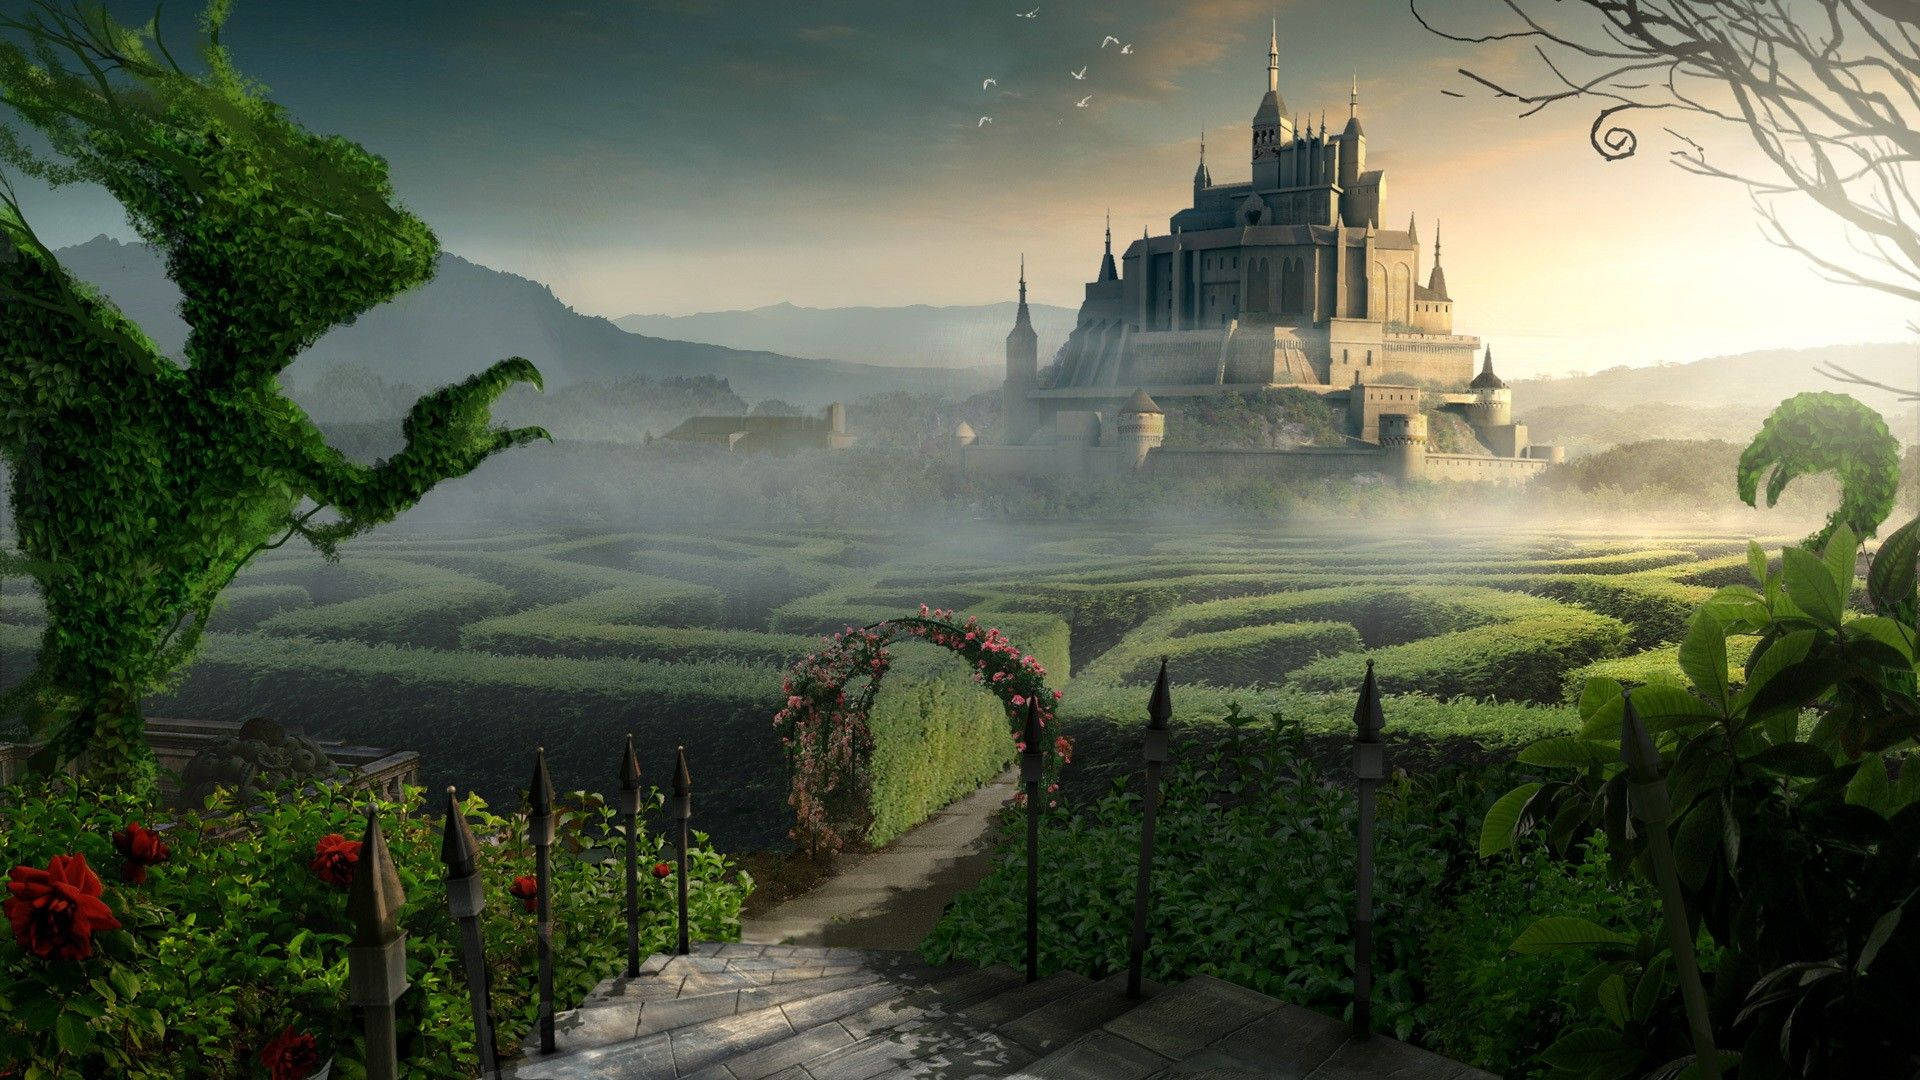 Fantasy Landscape Castle Wallpaper Cool Hd. I Hd Image